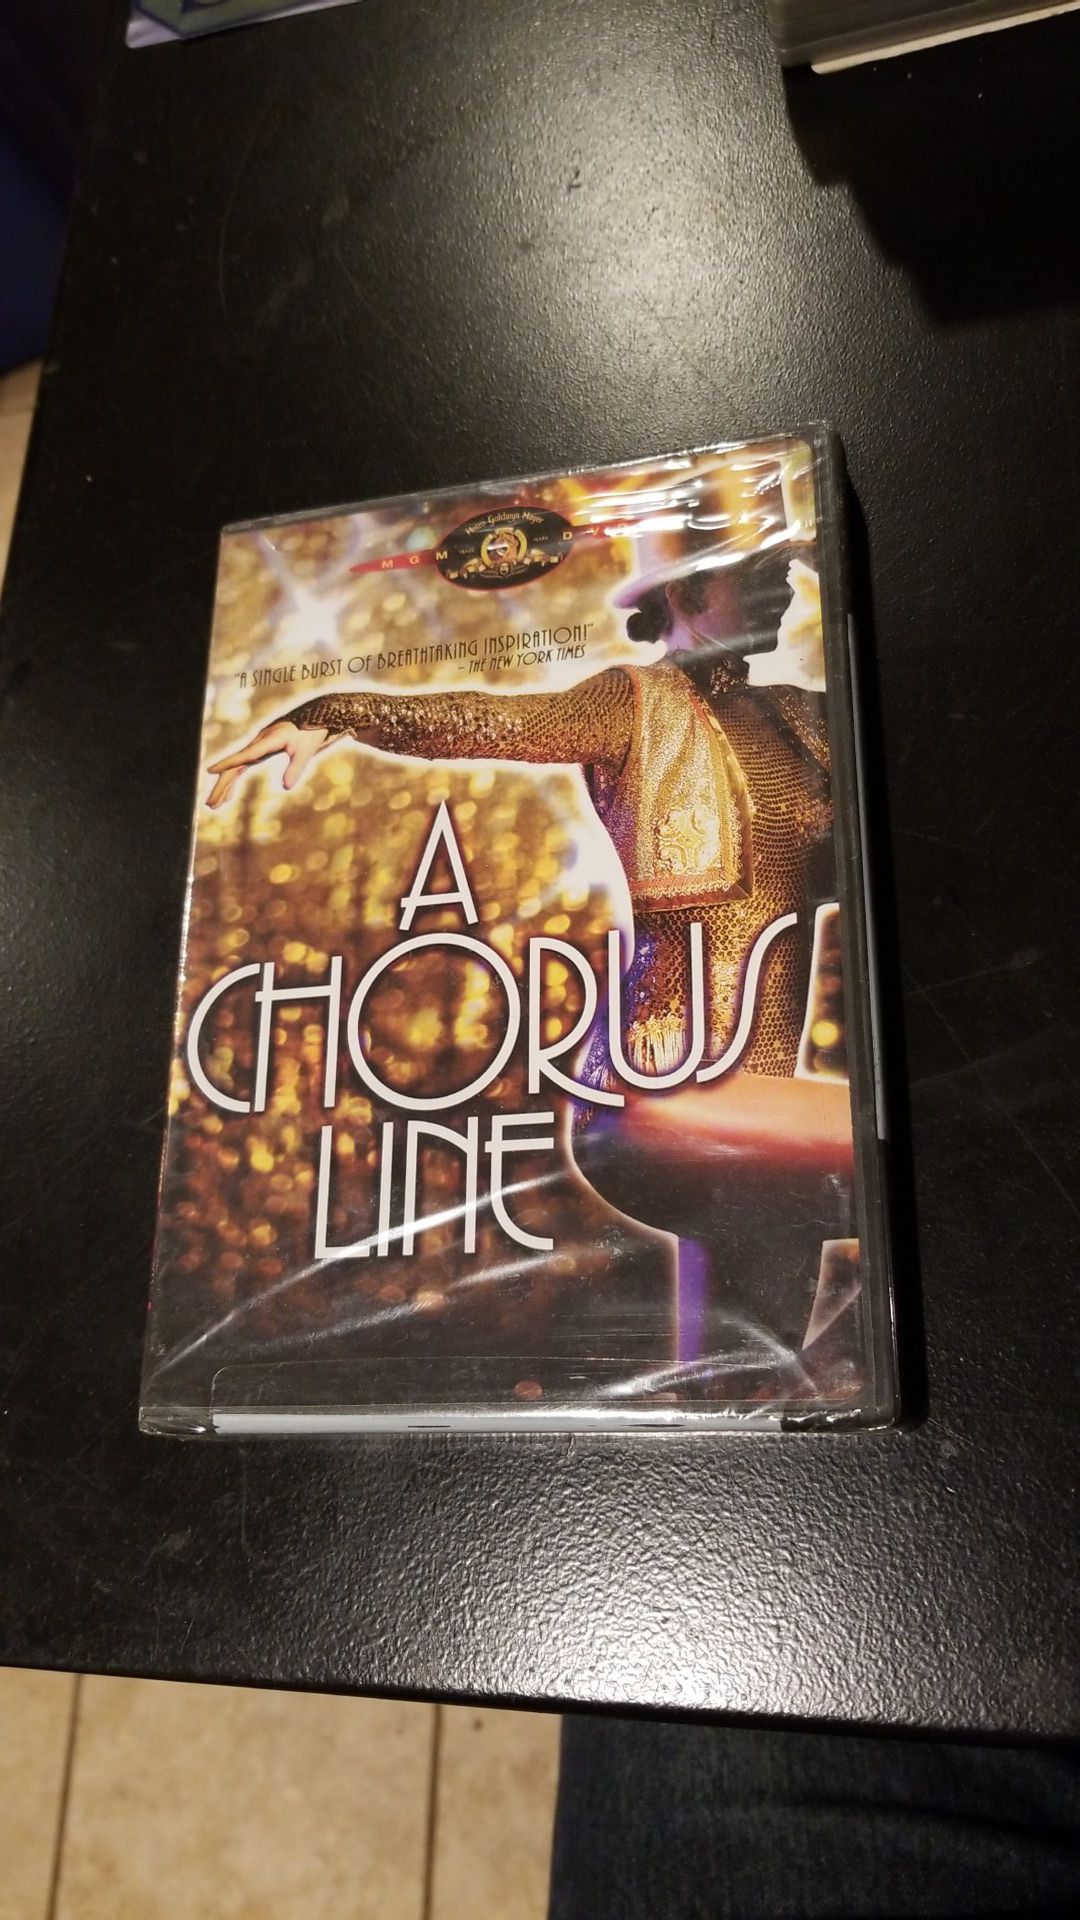 A Chorus Line Brand New Dvd